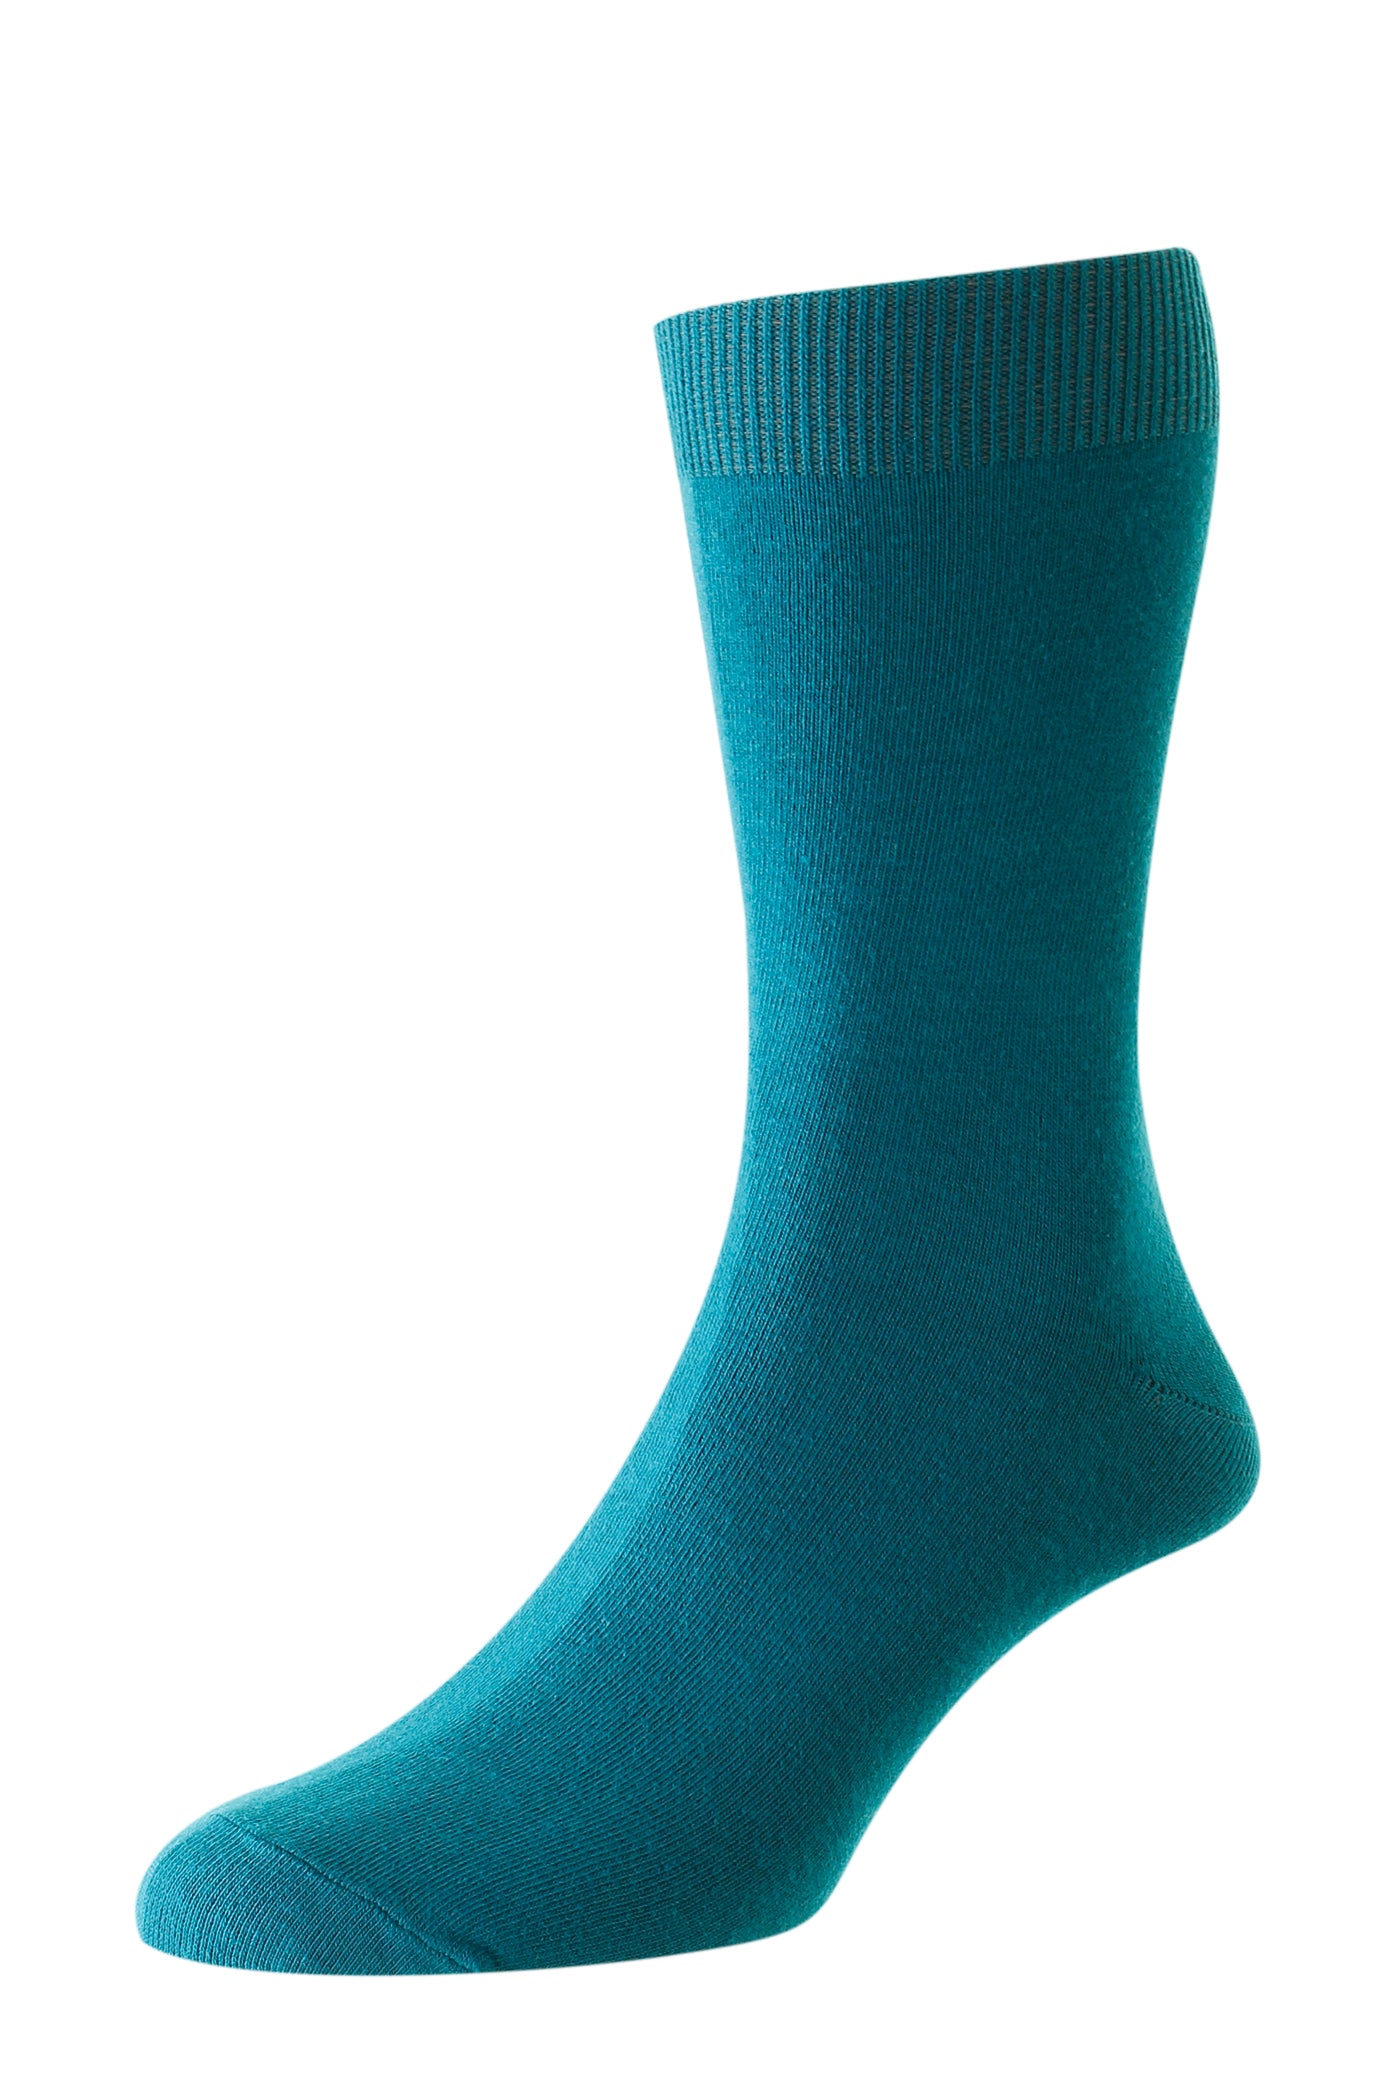 Blue Teal Wedding Socks